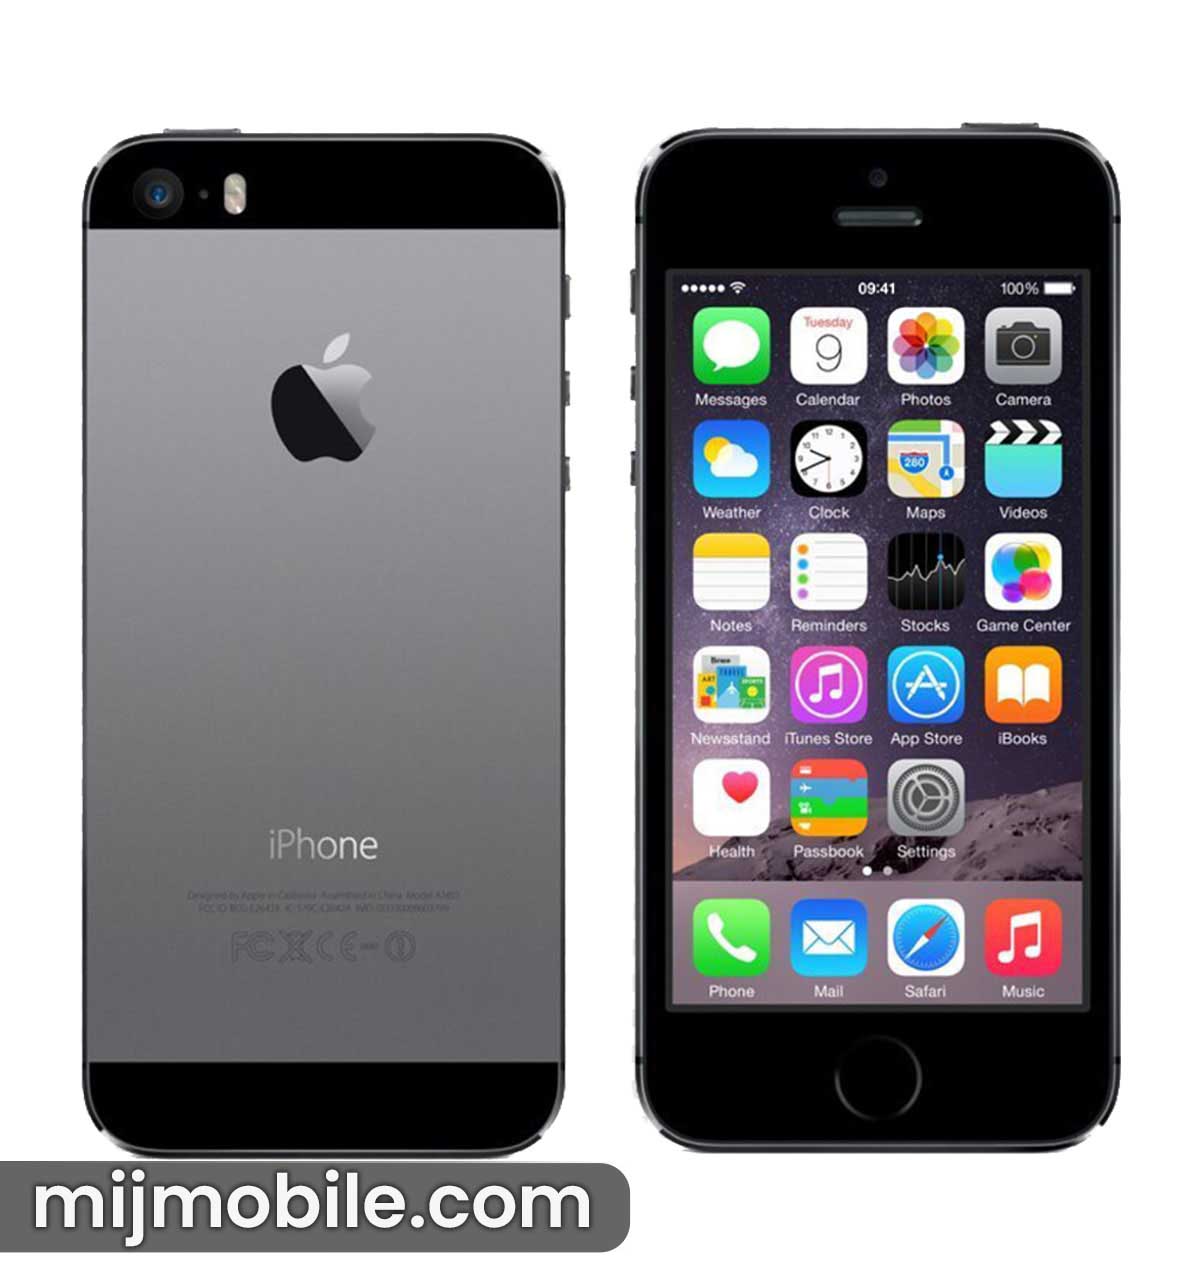 Apple iPhone 5S Price in Pakistan & Specifications Apple iPhone 5S Price in Pakistan is only 25,799.